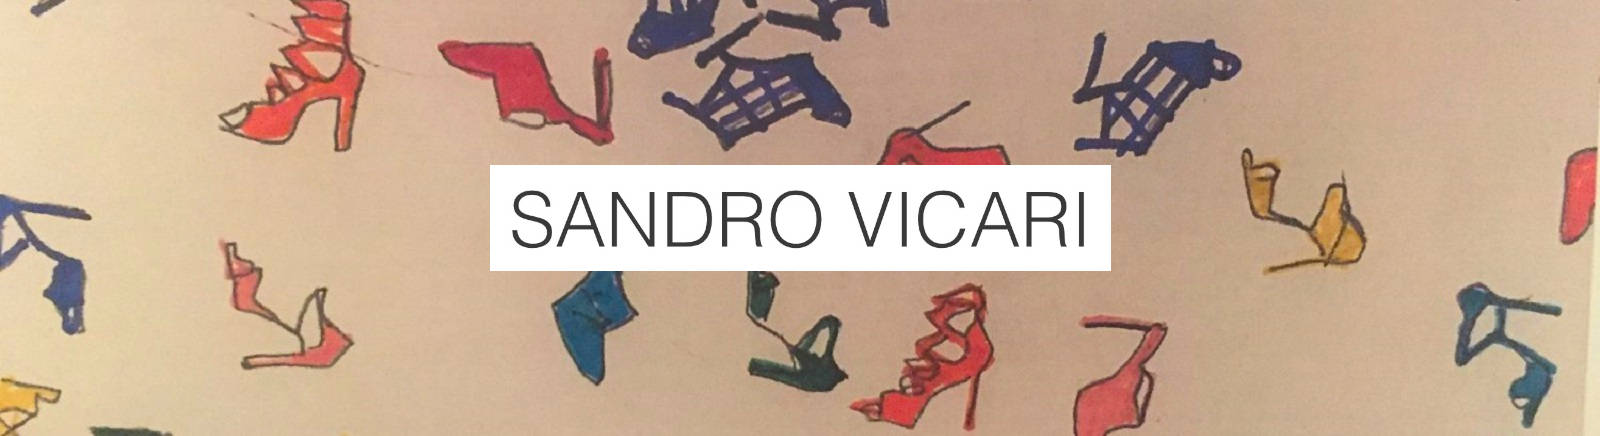 Juppen: Sandro Vicari Pumps Schuhe online kaufen online shoppen